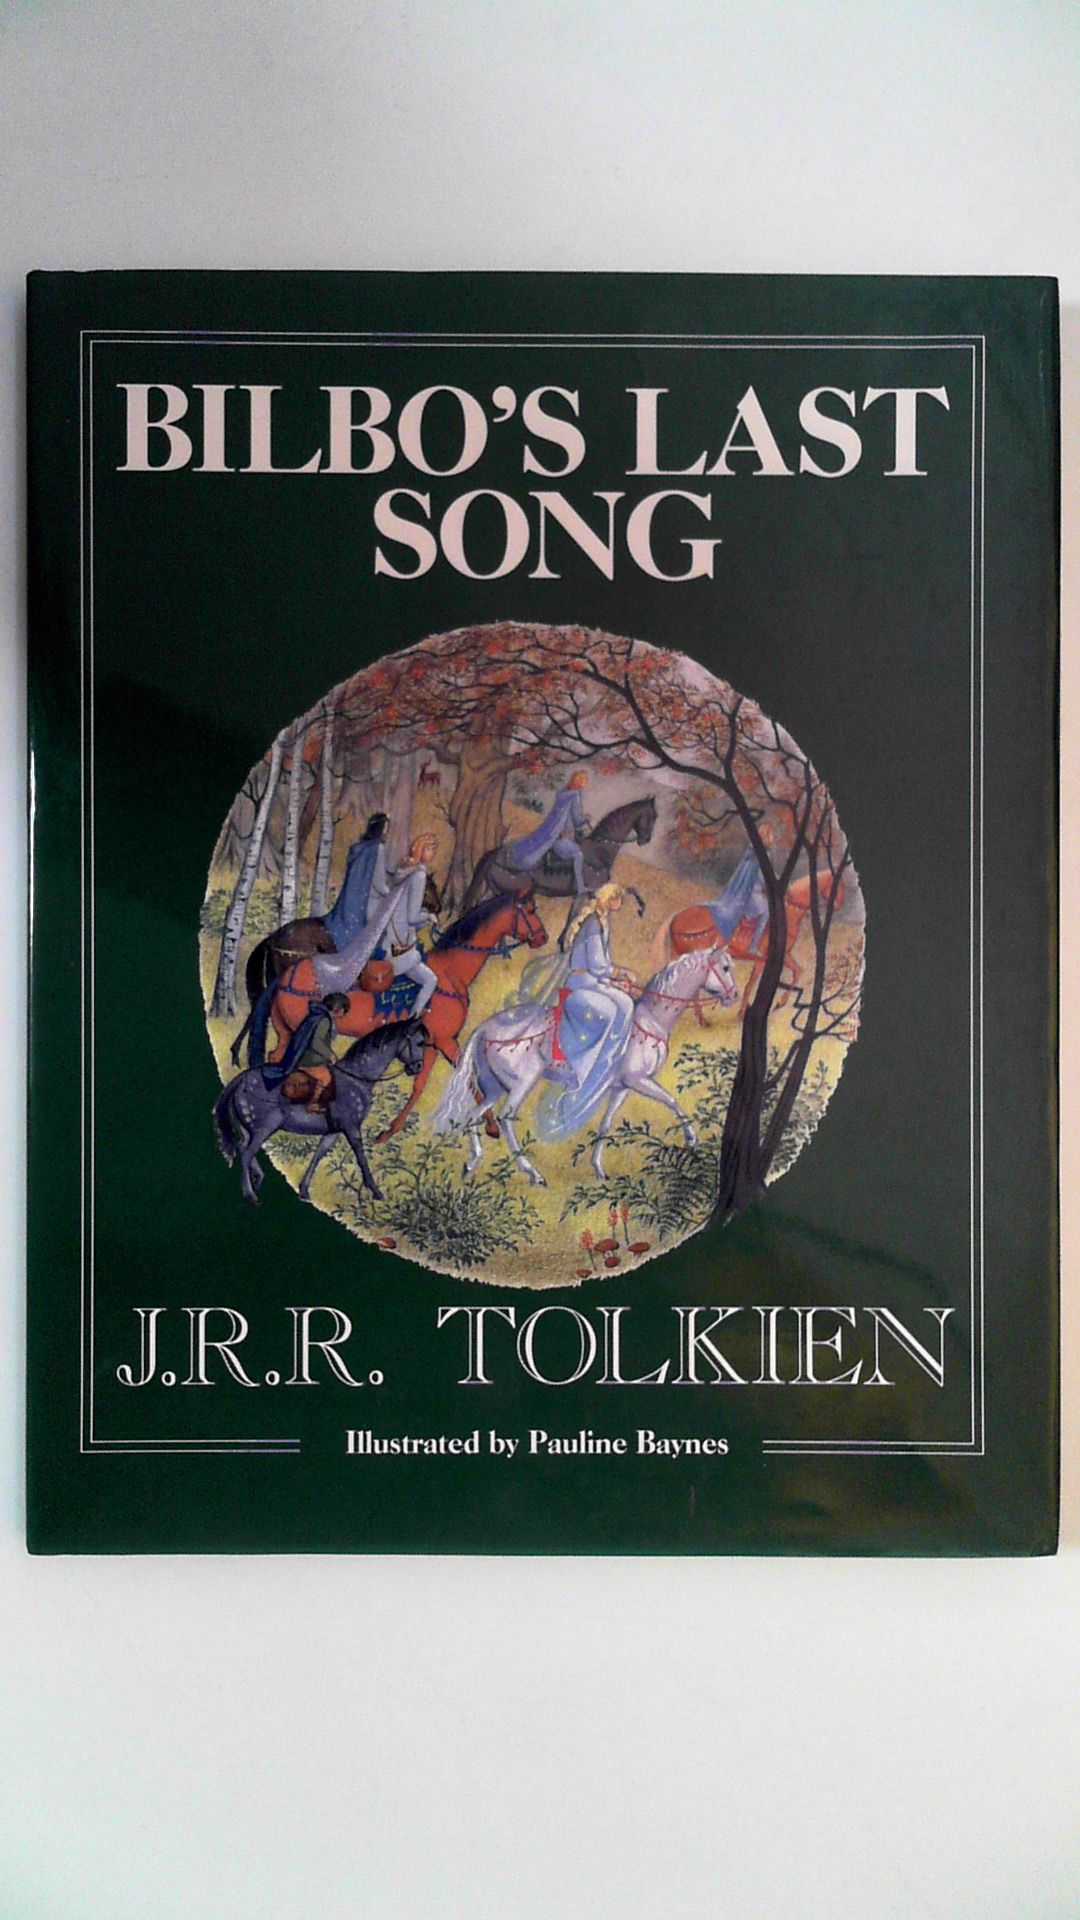 Bilbos Last Song (At the Grey Havens), Illustrated by Pauline Baynes, - Tolkien, J.R.R. and Pauline Baynes